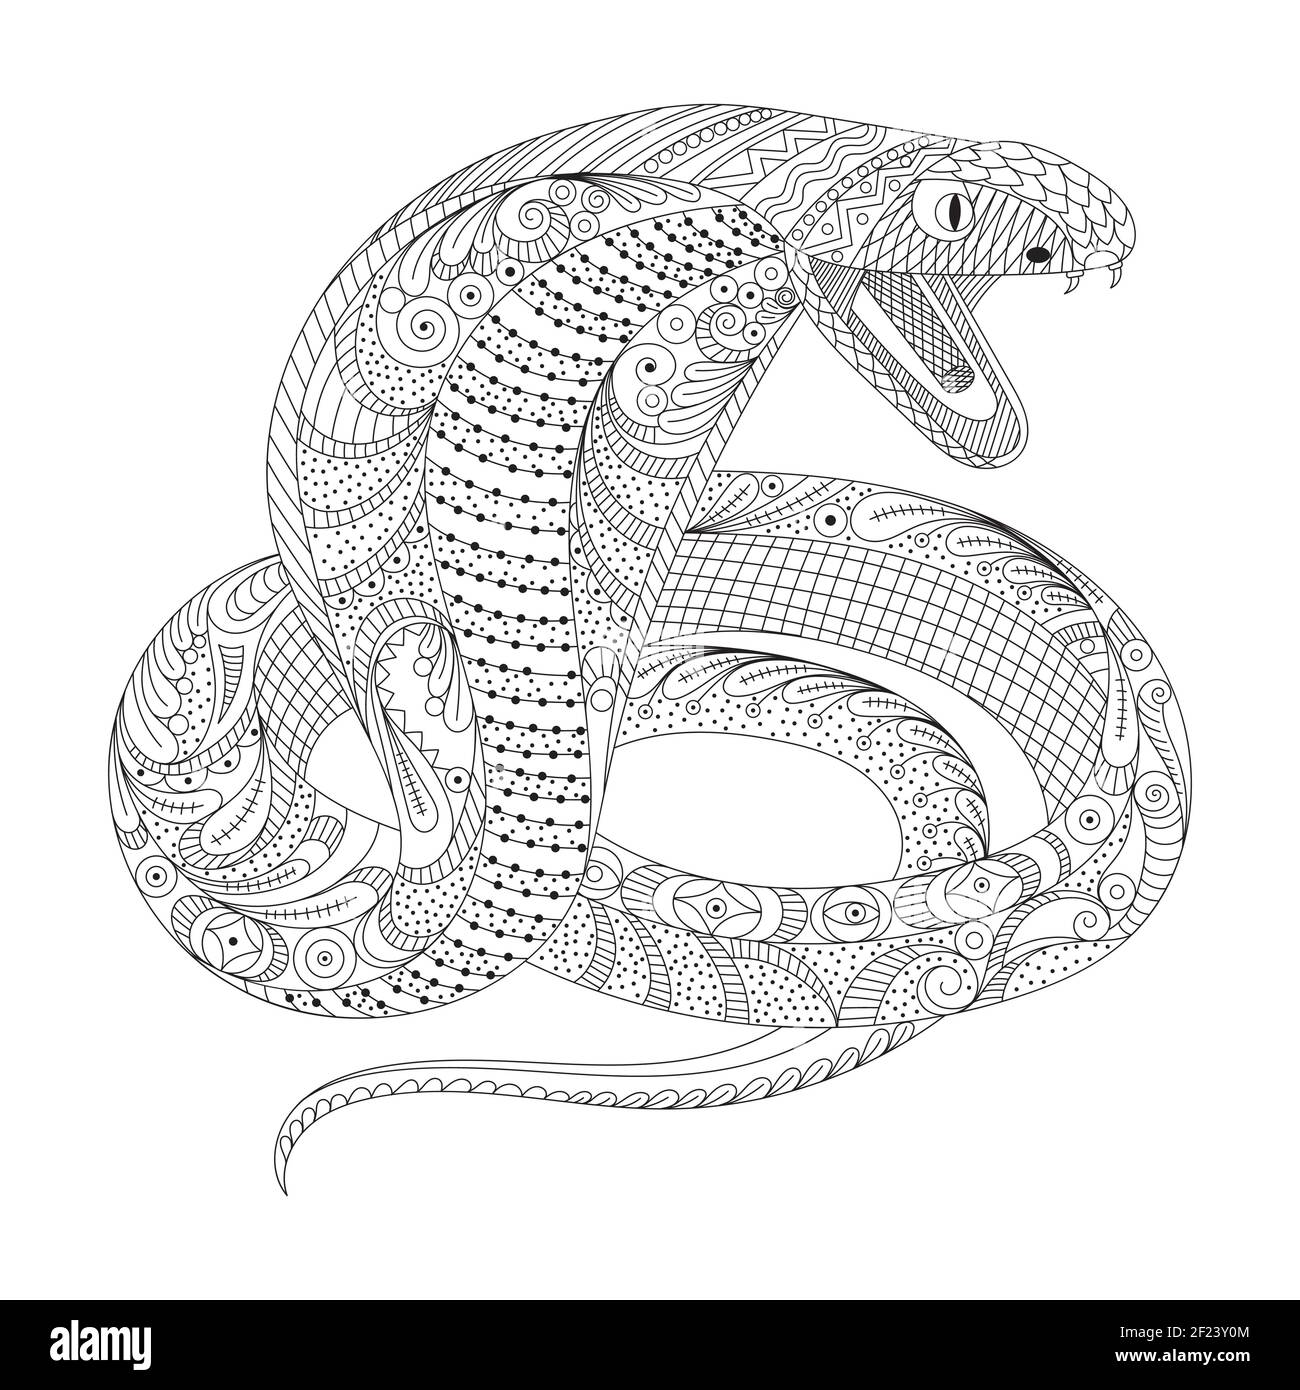 Clean lines doodle design of Cobra snake for adult coloring,T-Shirt design,Tattoo, children coloring book ,anti stress coloring book and so on - Stock Stock Vector